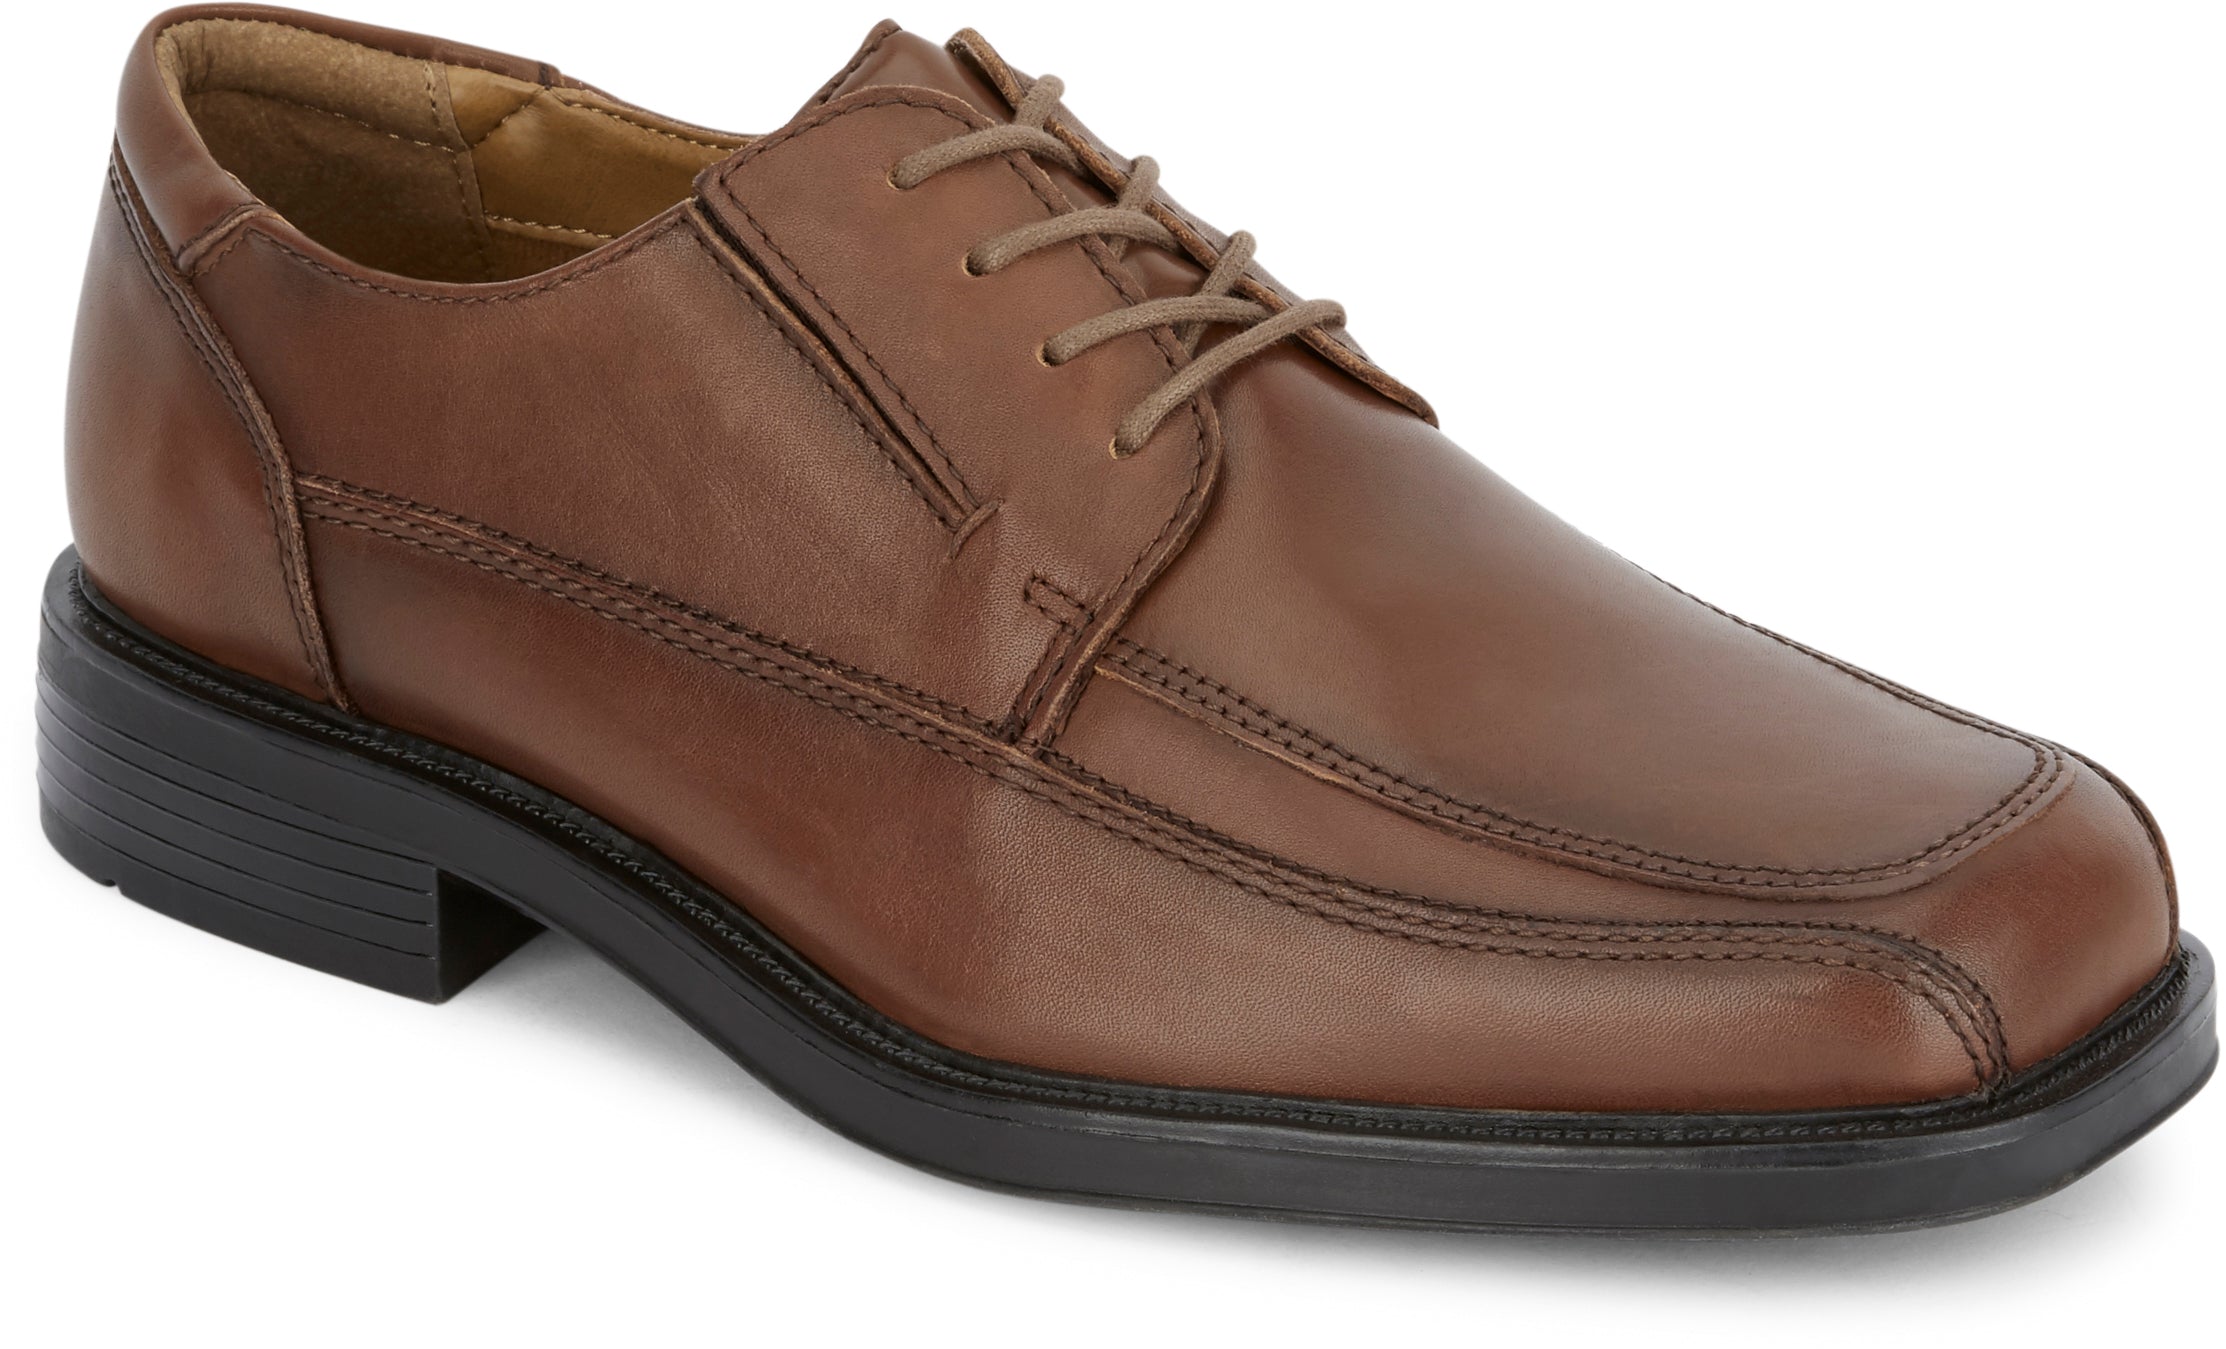 Dockers Footwear Men's Perspective Dress Oxford Shoe in Tan Side Angle View